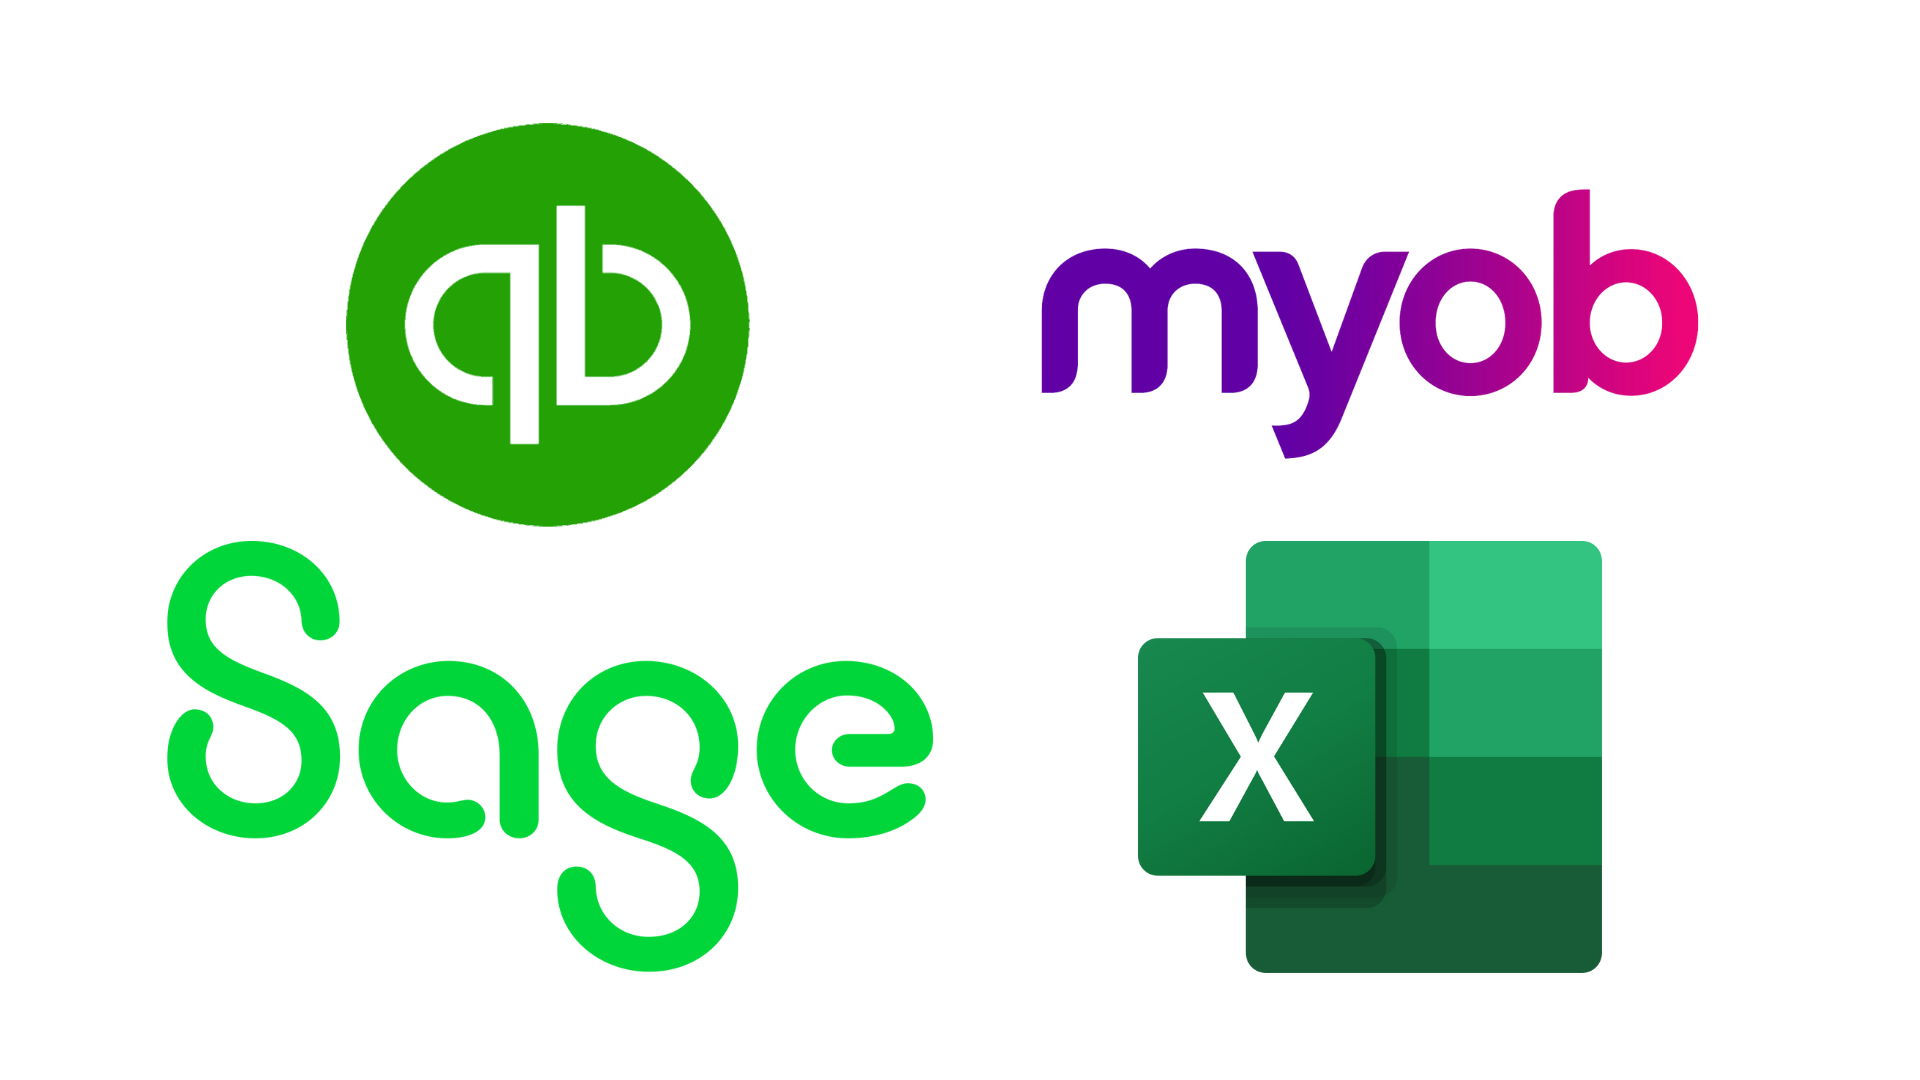 Range of software: Quickbooks, myob, Excel, and Sage